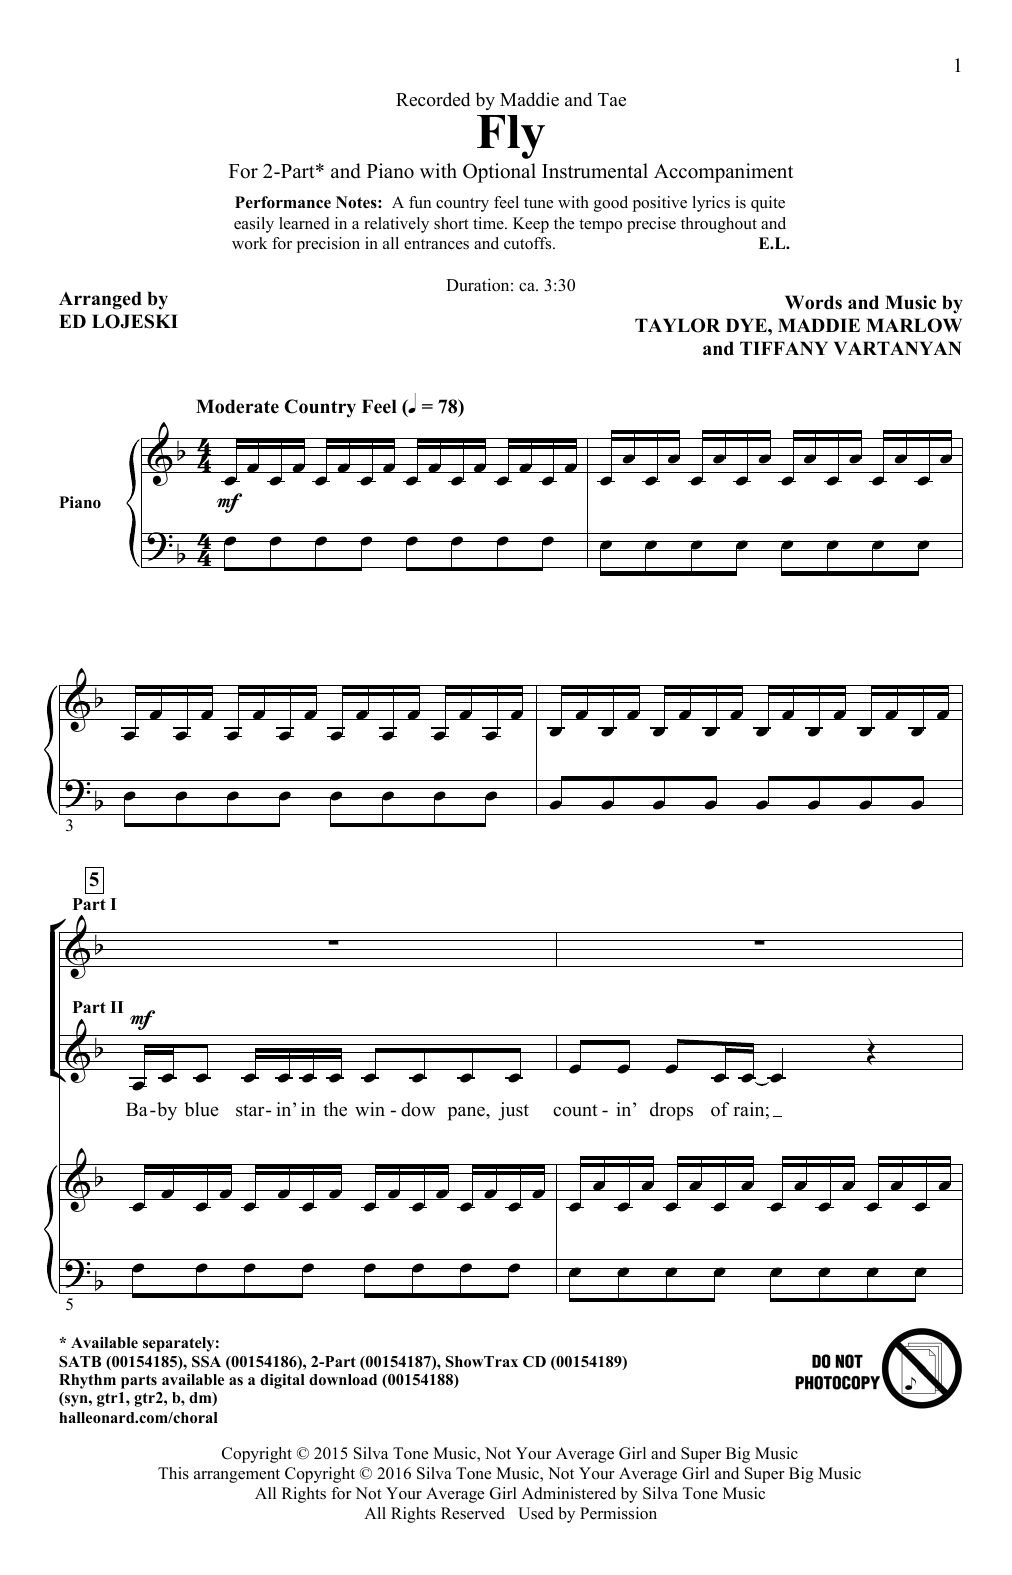 Ed Lojeski Fly sheet music notes and chords arranged for SATB Choir